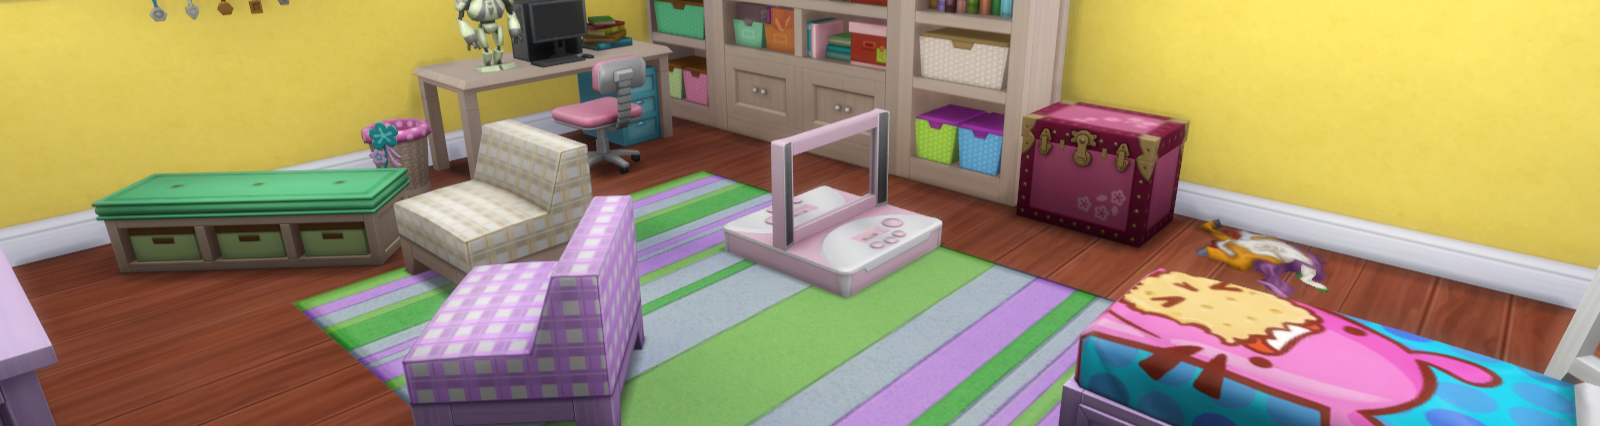 The Sims 4 Kids Room Stuff Pack DLC for PC Game Origin Key Region Free